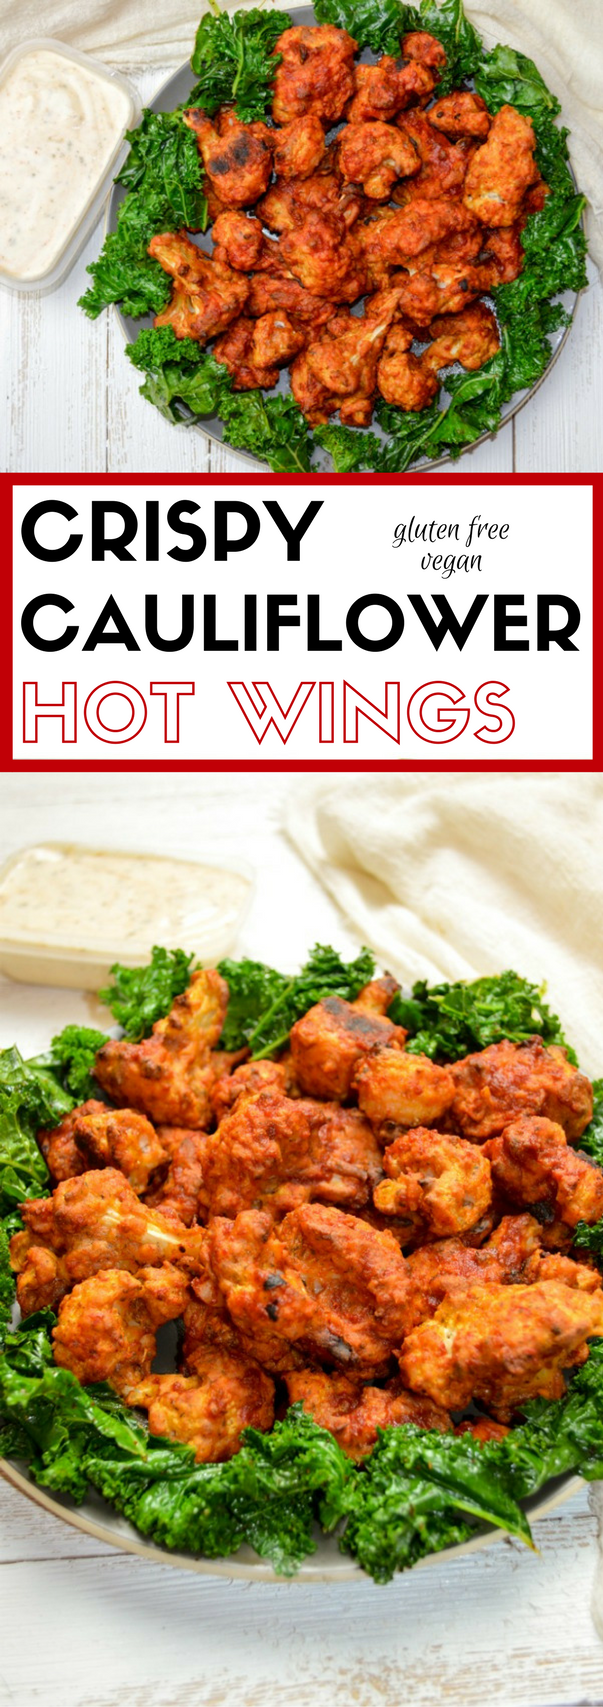 Crispy Cauliflower Hot Wings – vegan and gluten free -   19 yummy vegan recipes
 ideas